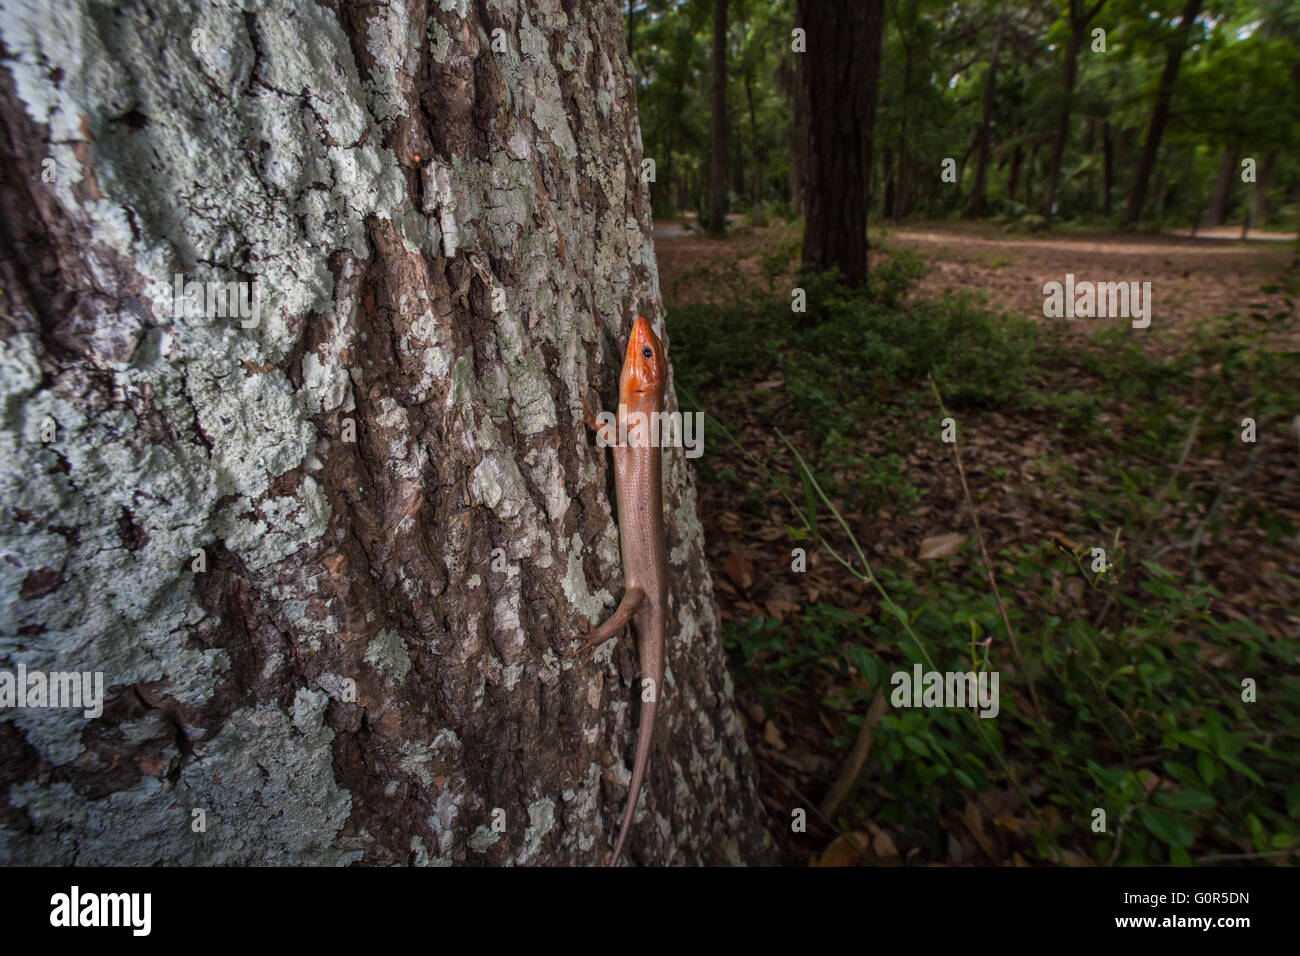 A male Broad-headed Skink (Plestiodon laticeps) surveys its surroundings from the side of an oak tree. Stock Photo